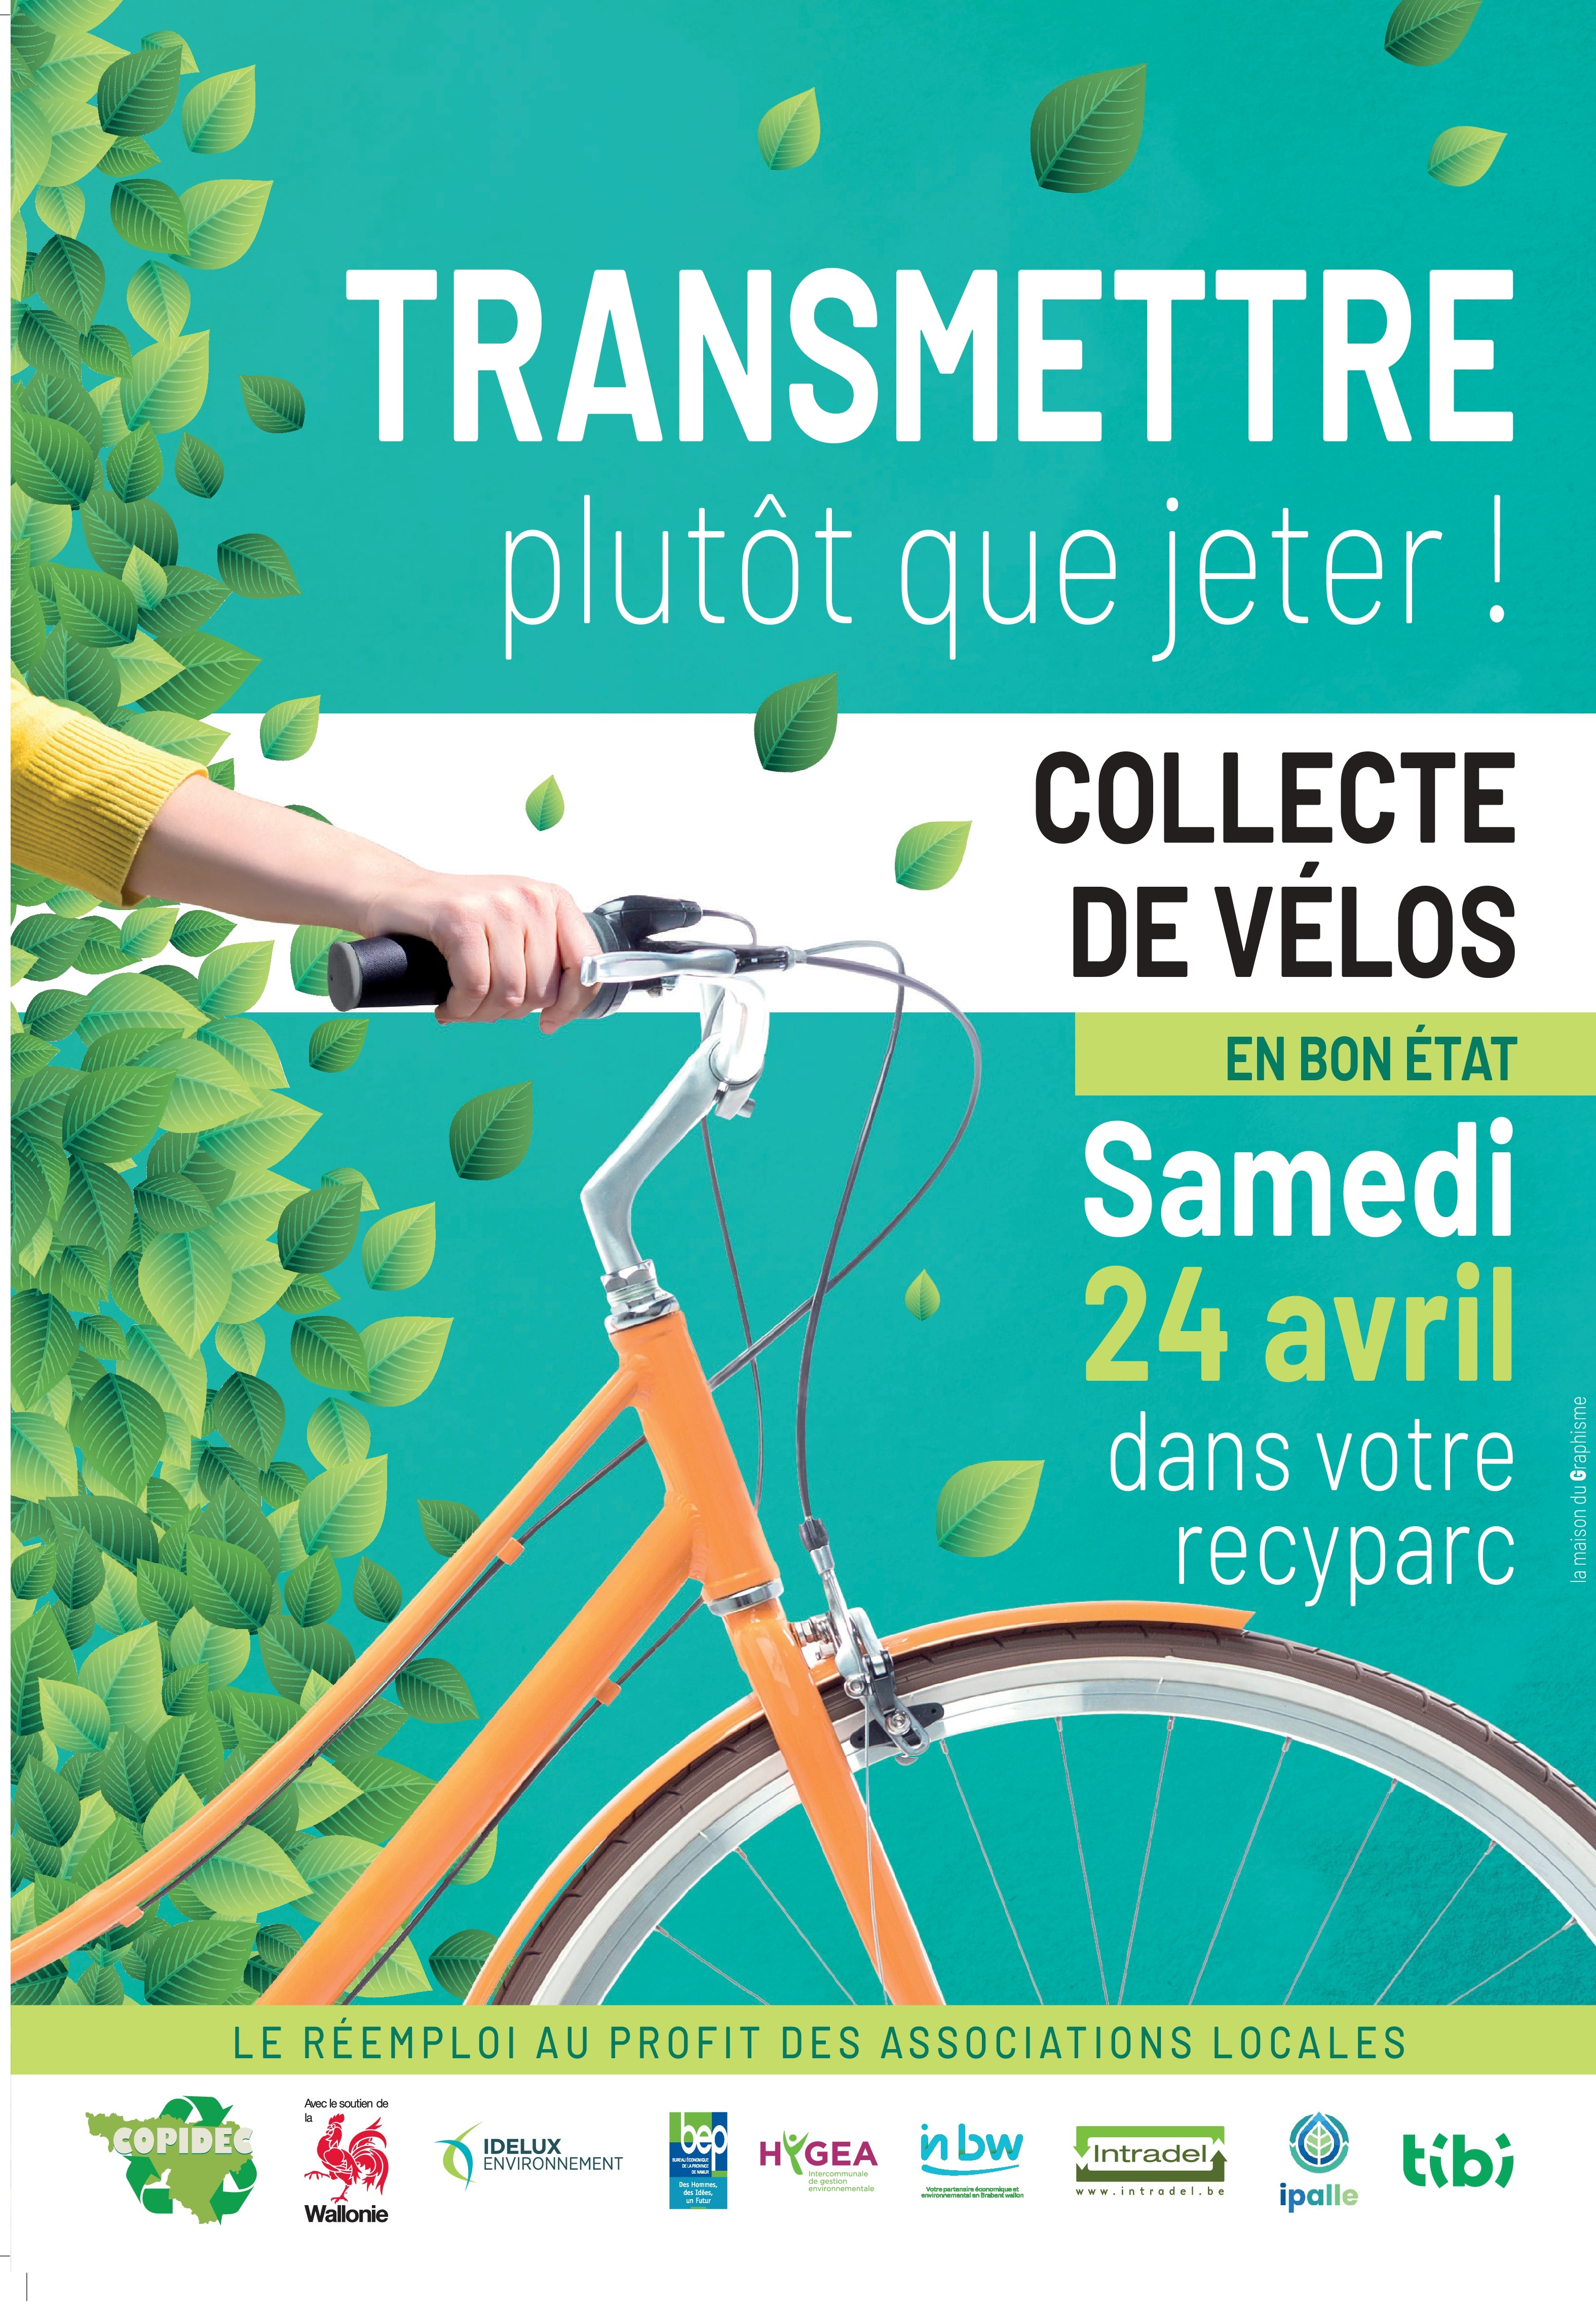 Collecte des vélos dans les recyparcs - Samedi 24 avril 2021